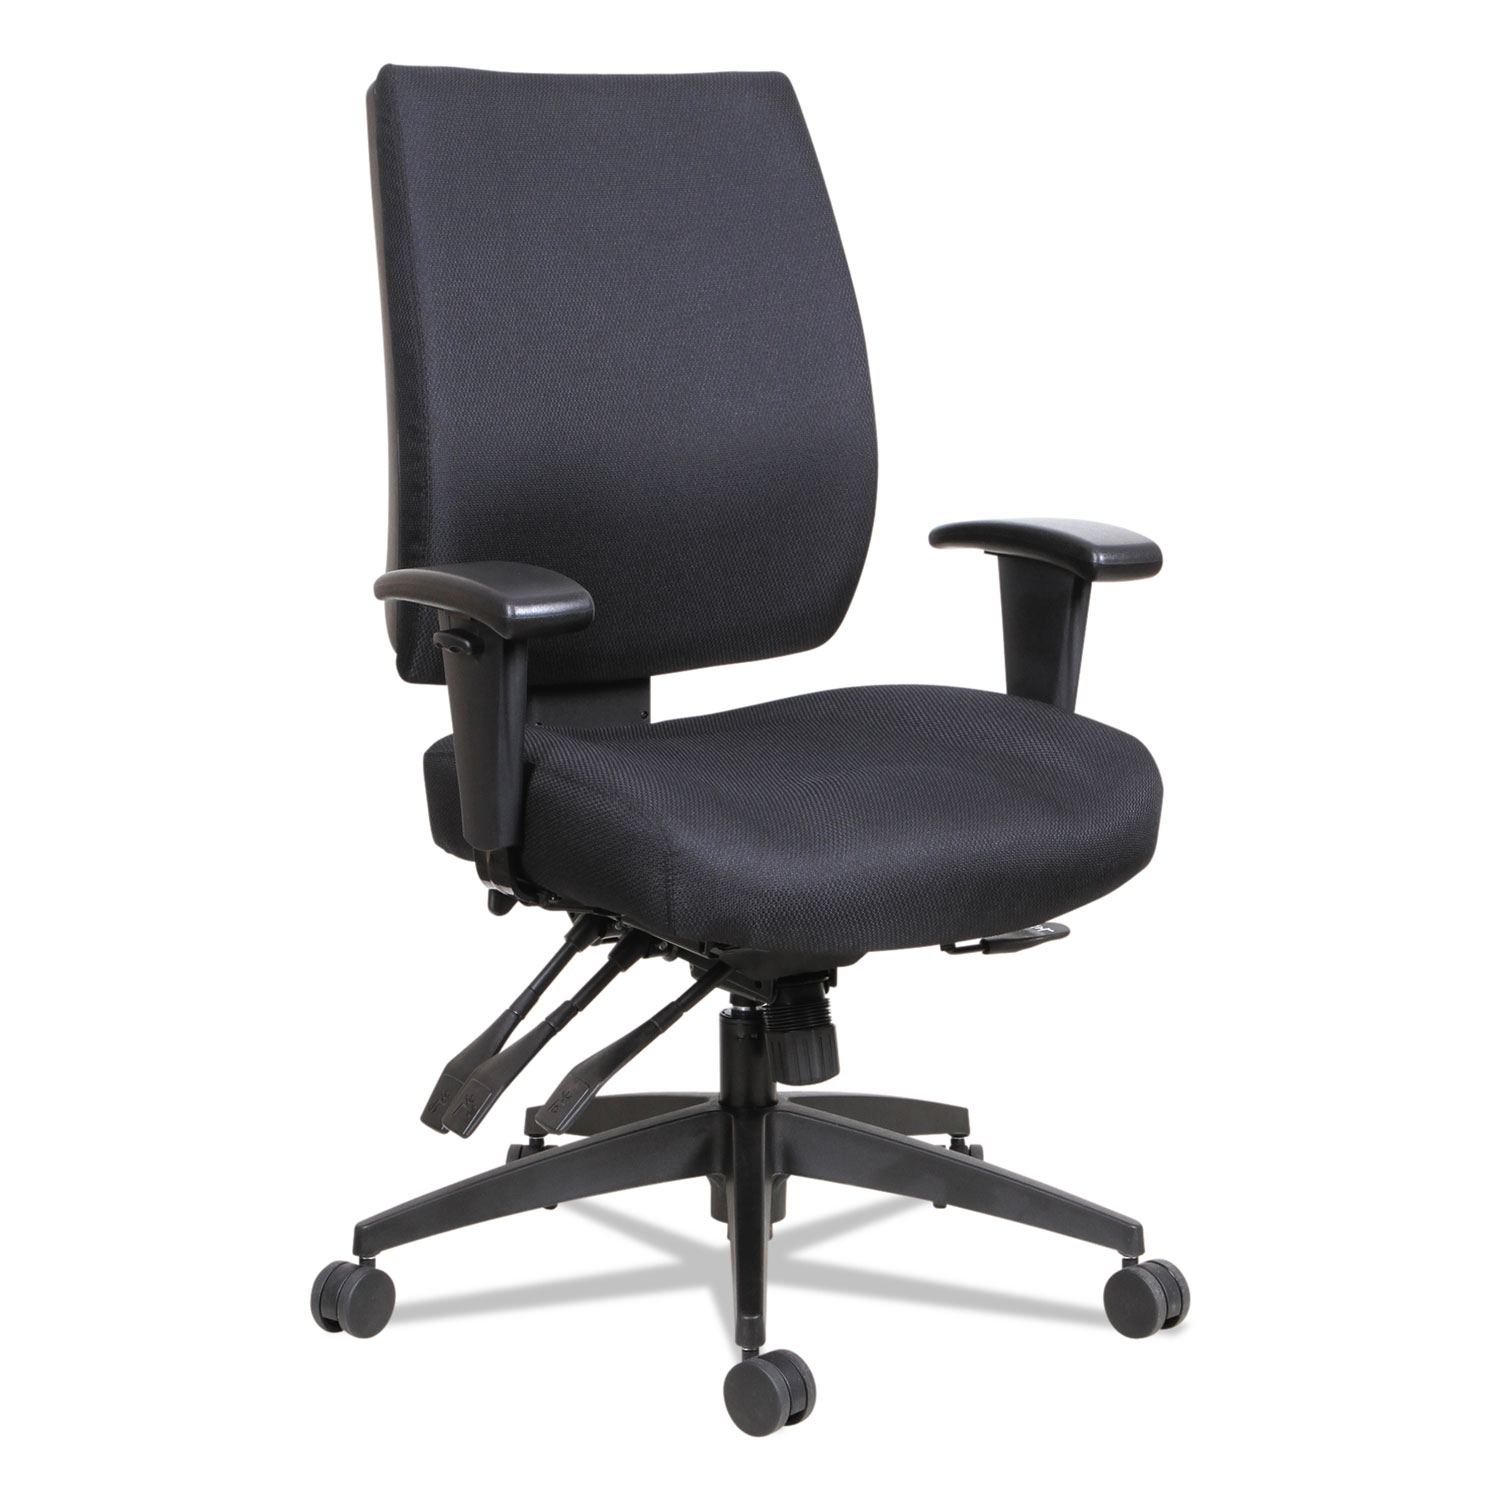  Alera ALEHPM4201 Alera Wrigley Series High Performance Mid-Back Multifunction Task Chair, Up to 275 lbs., Black Seat/Back, Black Base (ALEHPM4201) 